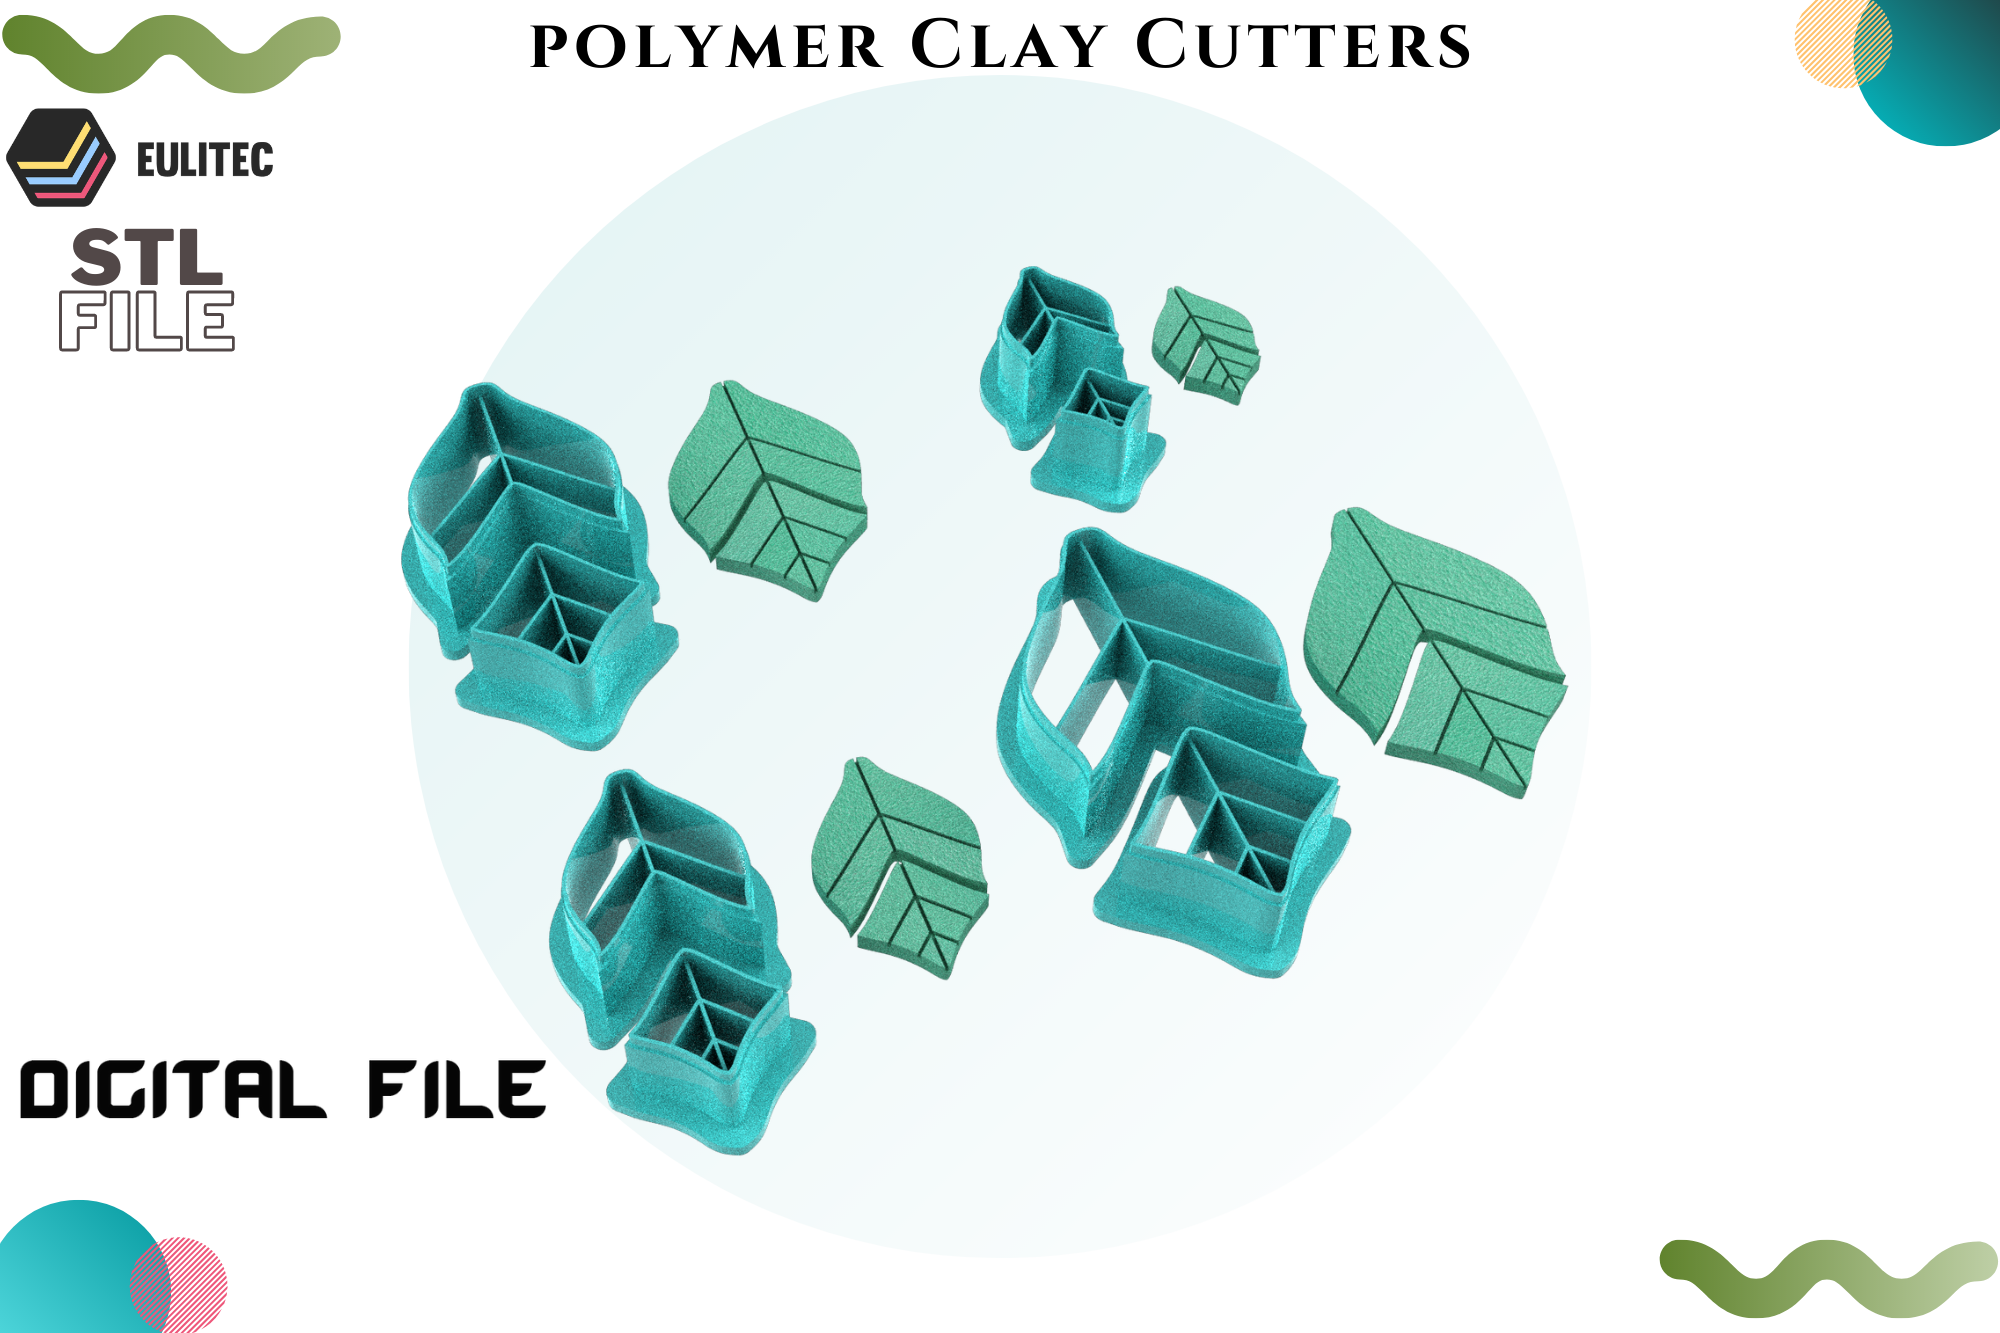 2-leaf-1-1.png Download STL file Coupeur d'argile polymère/feuilles!!!! One of the jewels of life • 3D print model, EULITEC